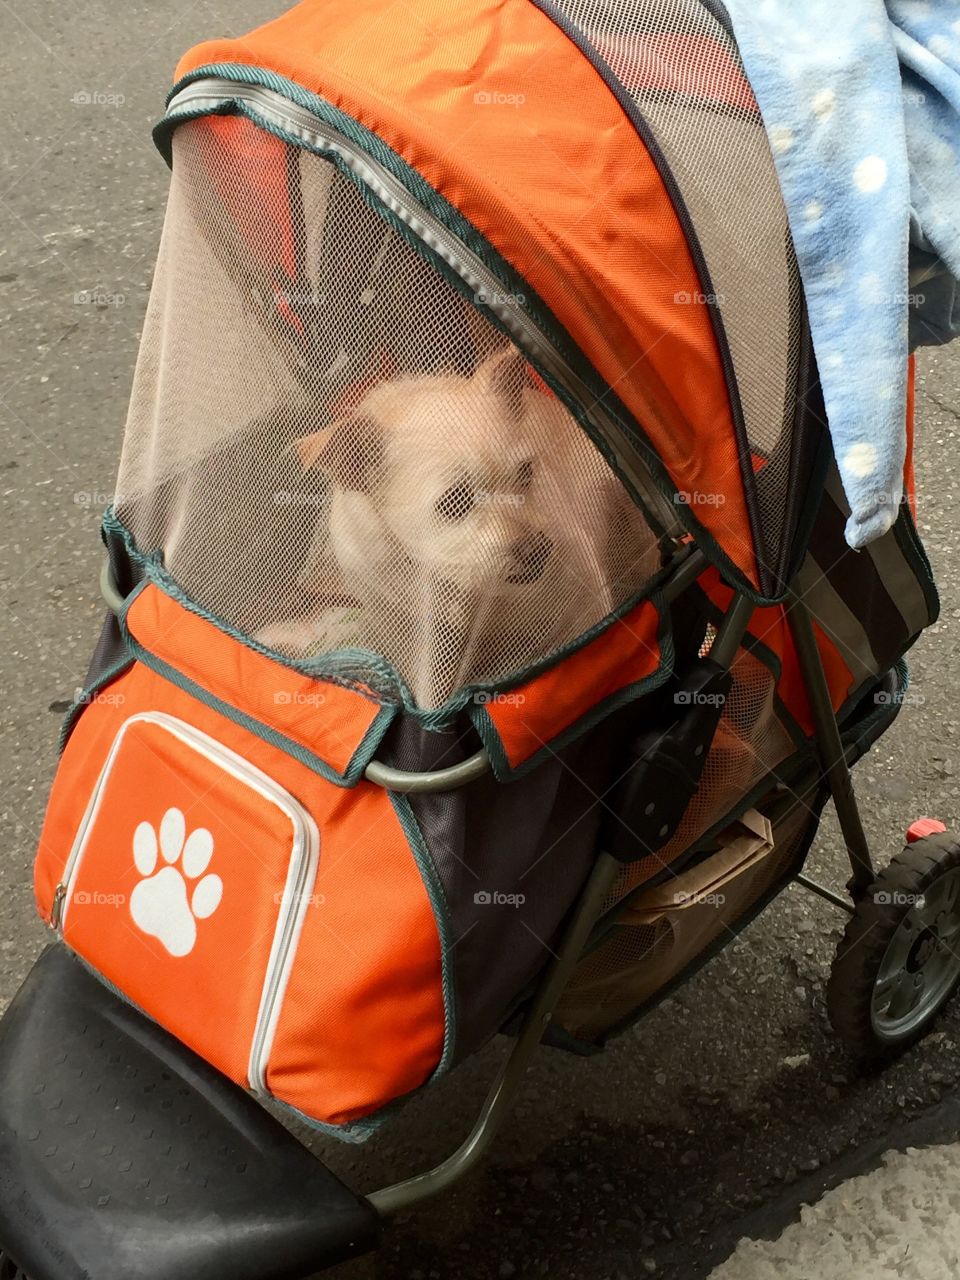 Doggy Stroller